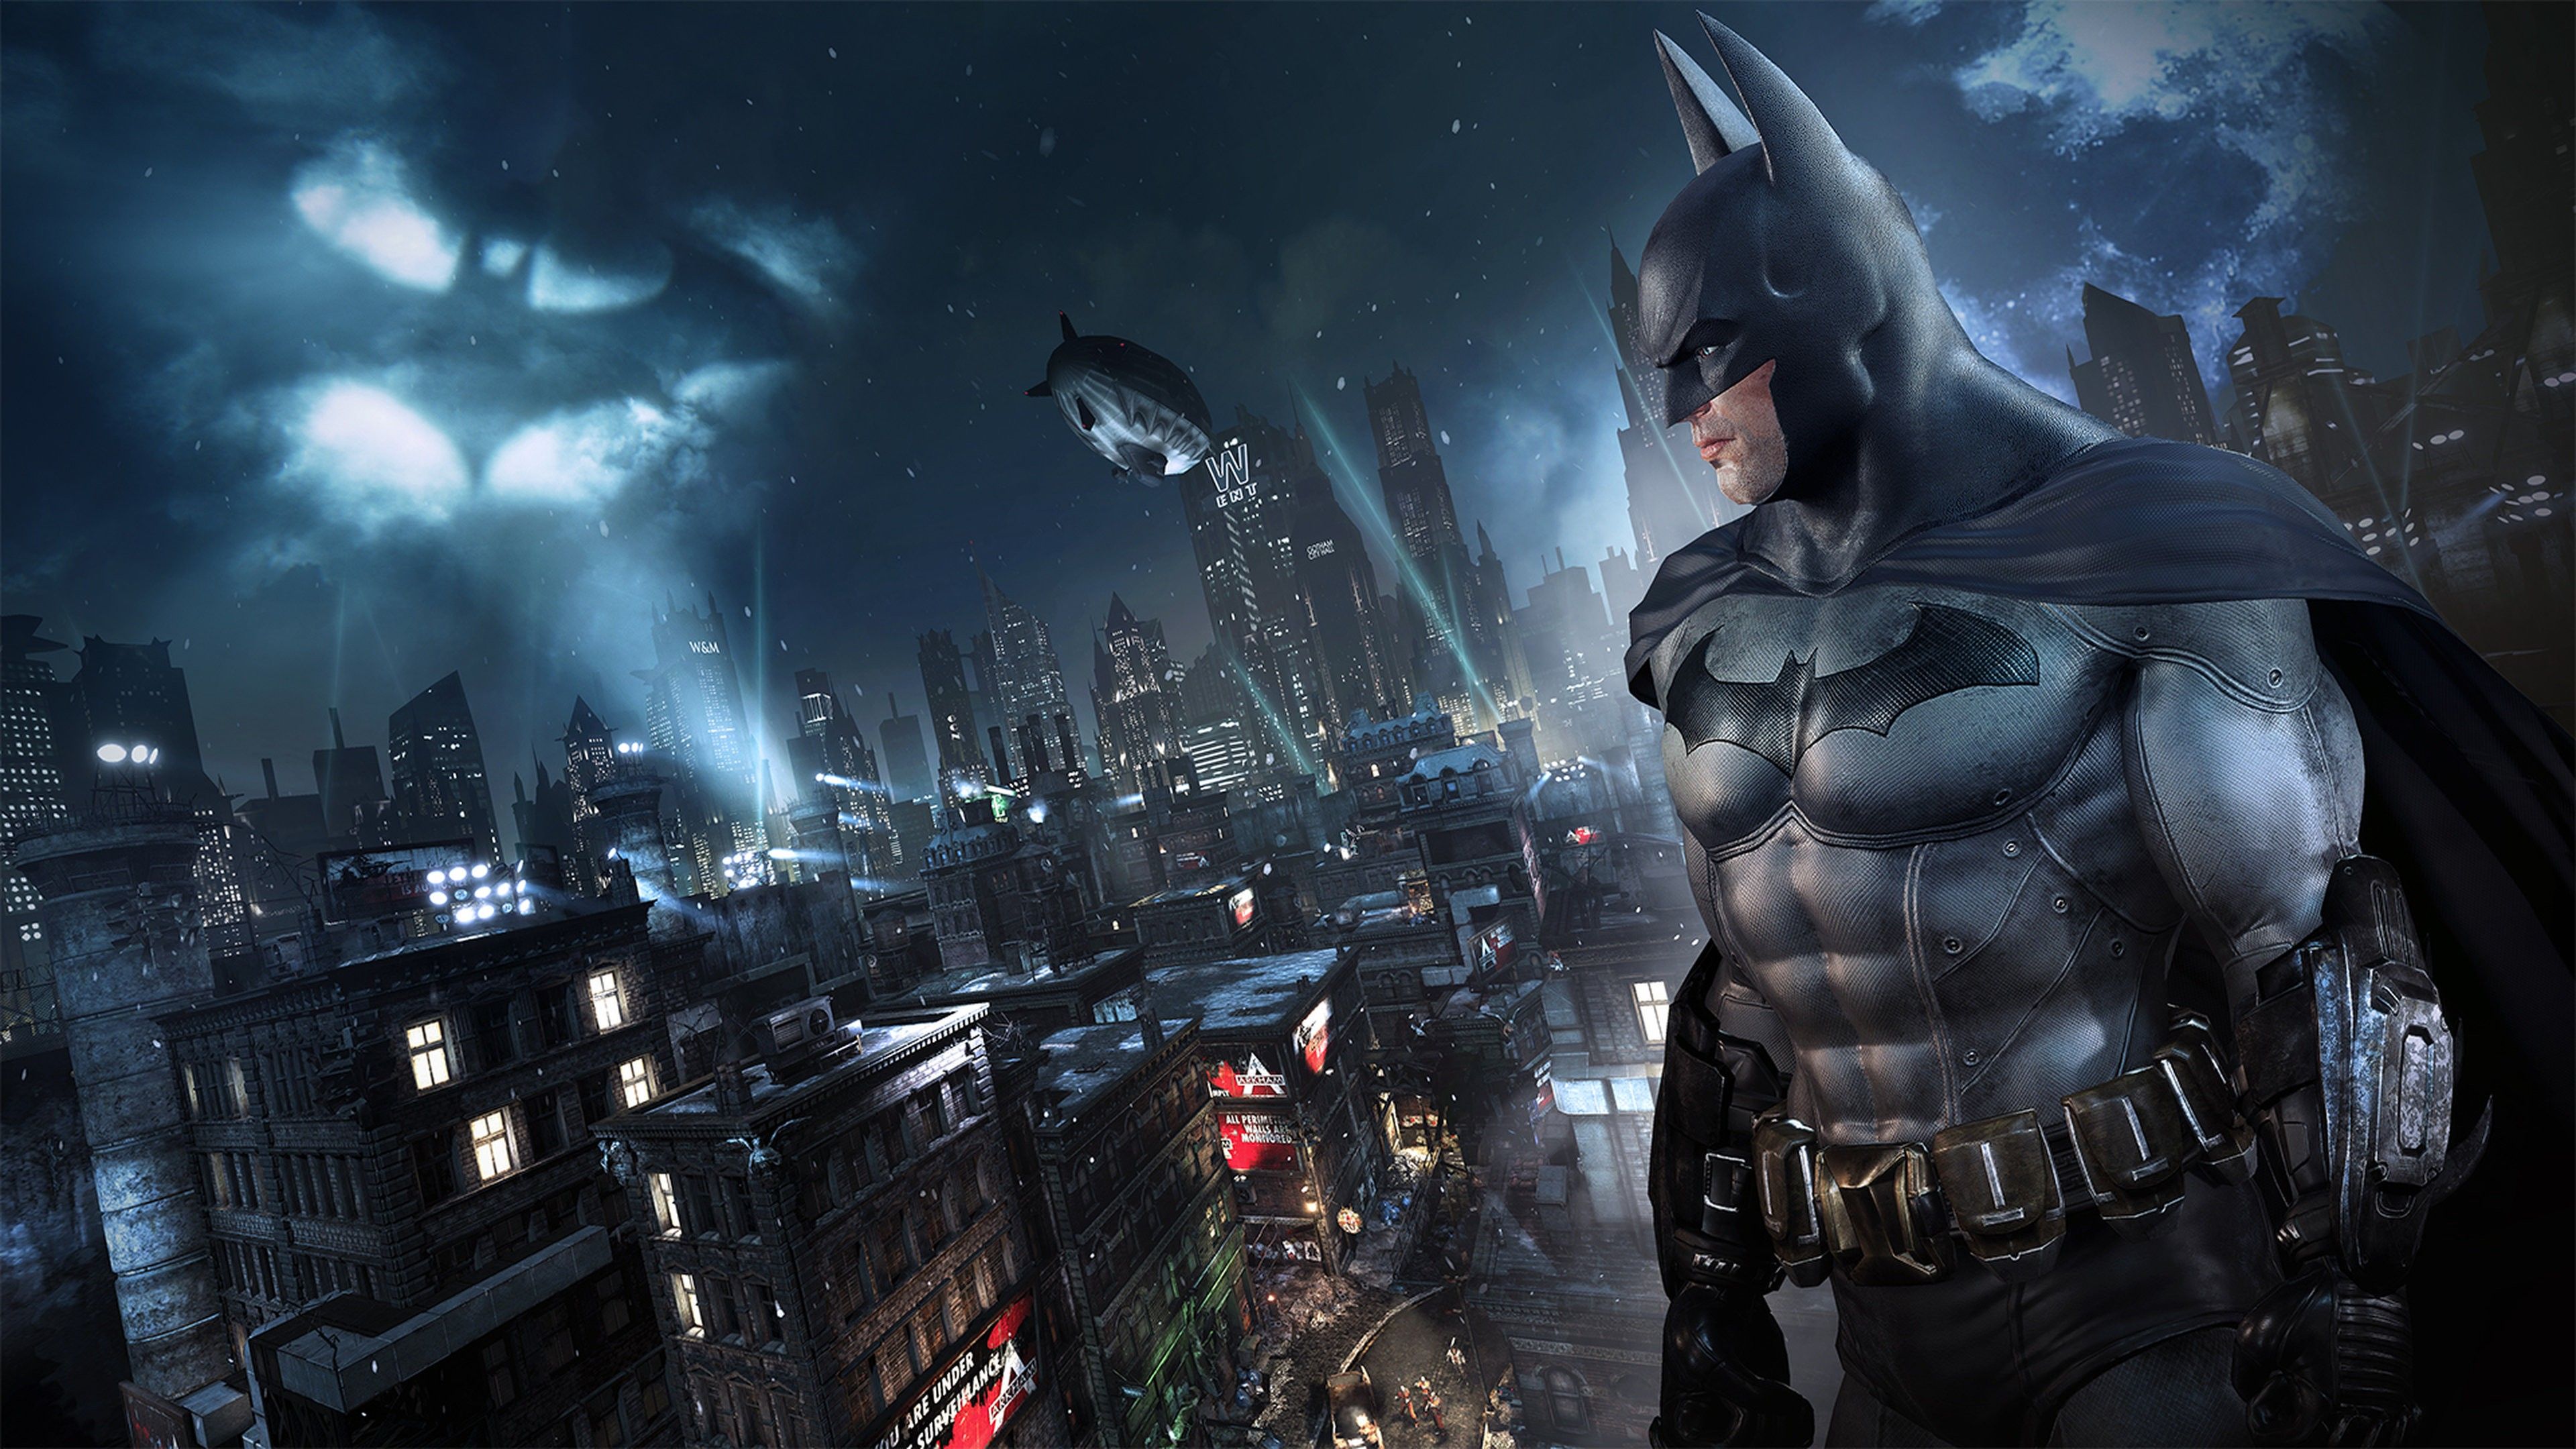 Wallpaper Batman Return to Arkham, Batman Arkham City, Batman Arkham Asylum,  Batman, Warner Bros, Background - Download Free Image